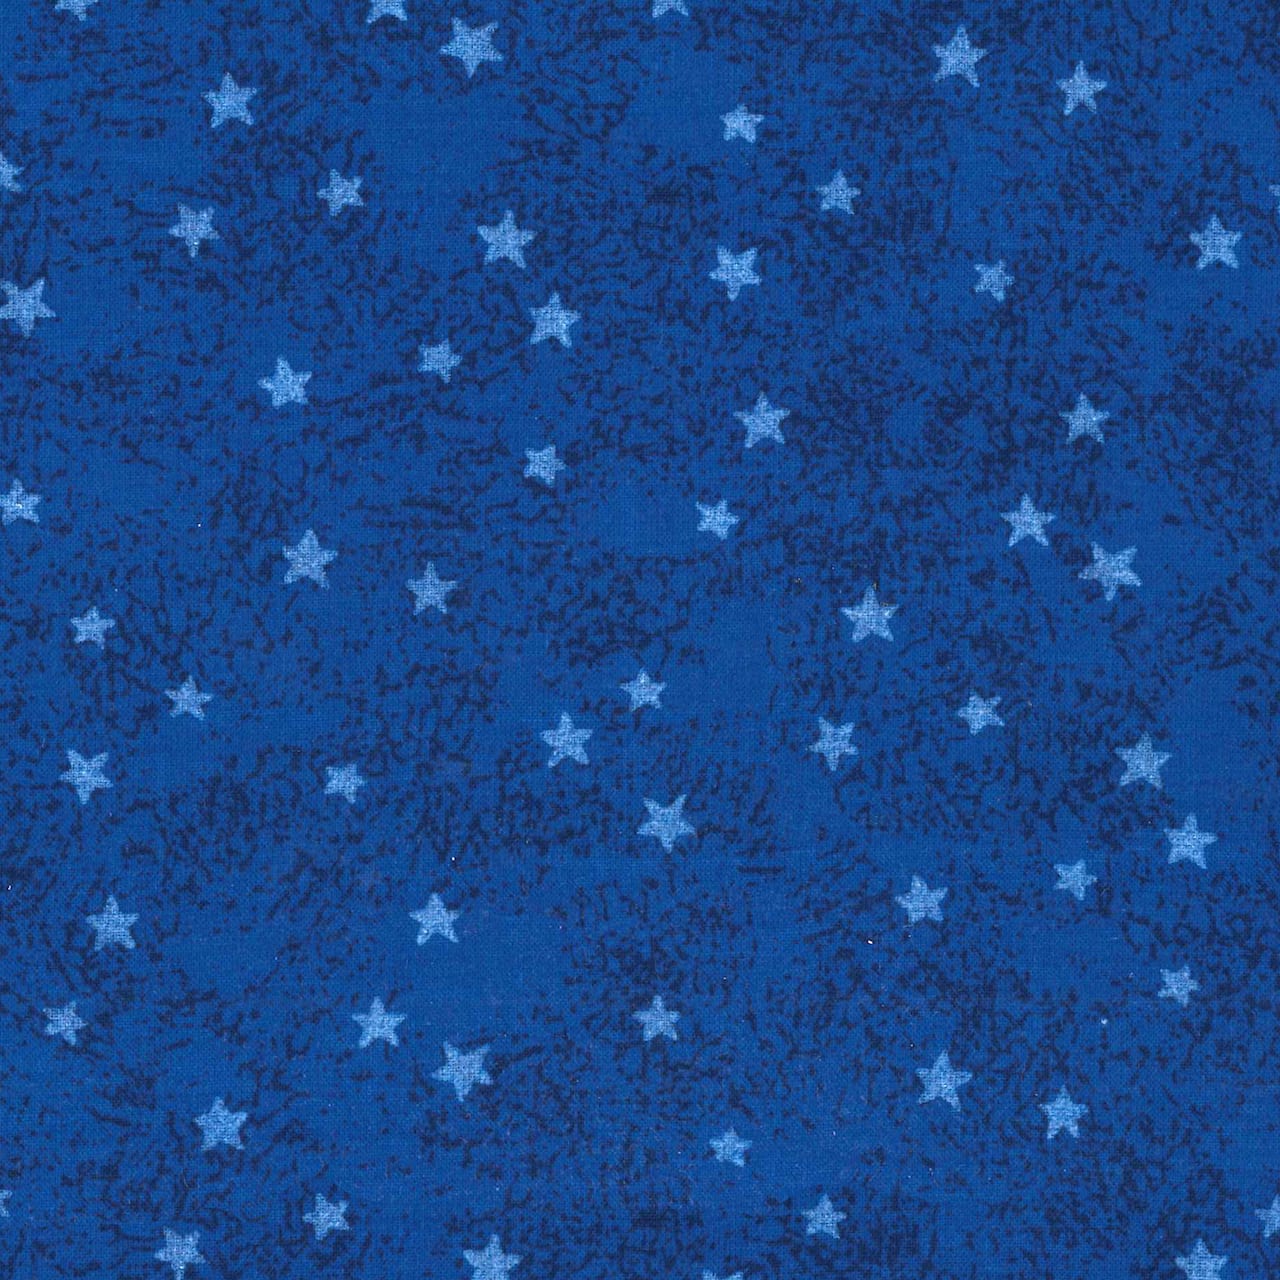 Fabric Traditions Navy Stars Cotton Fabric